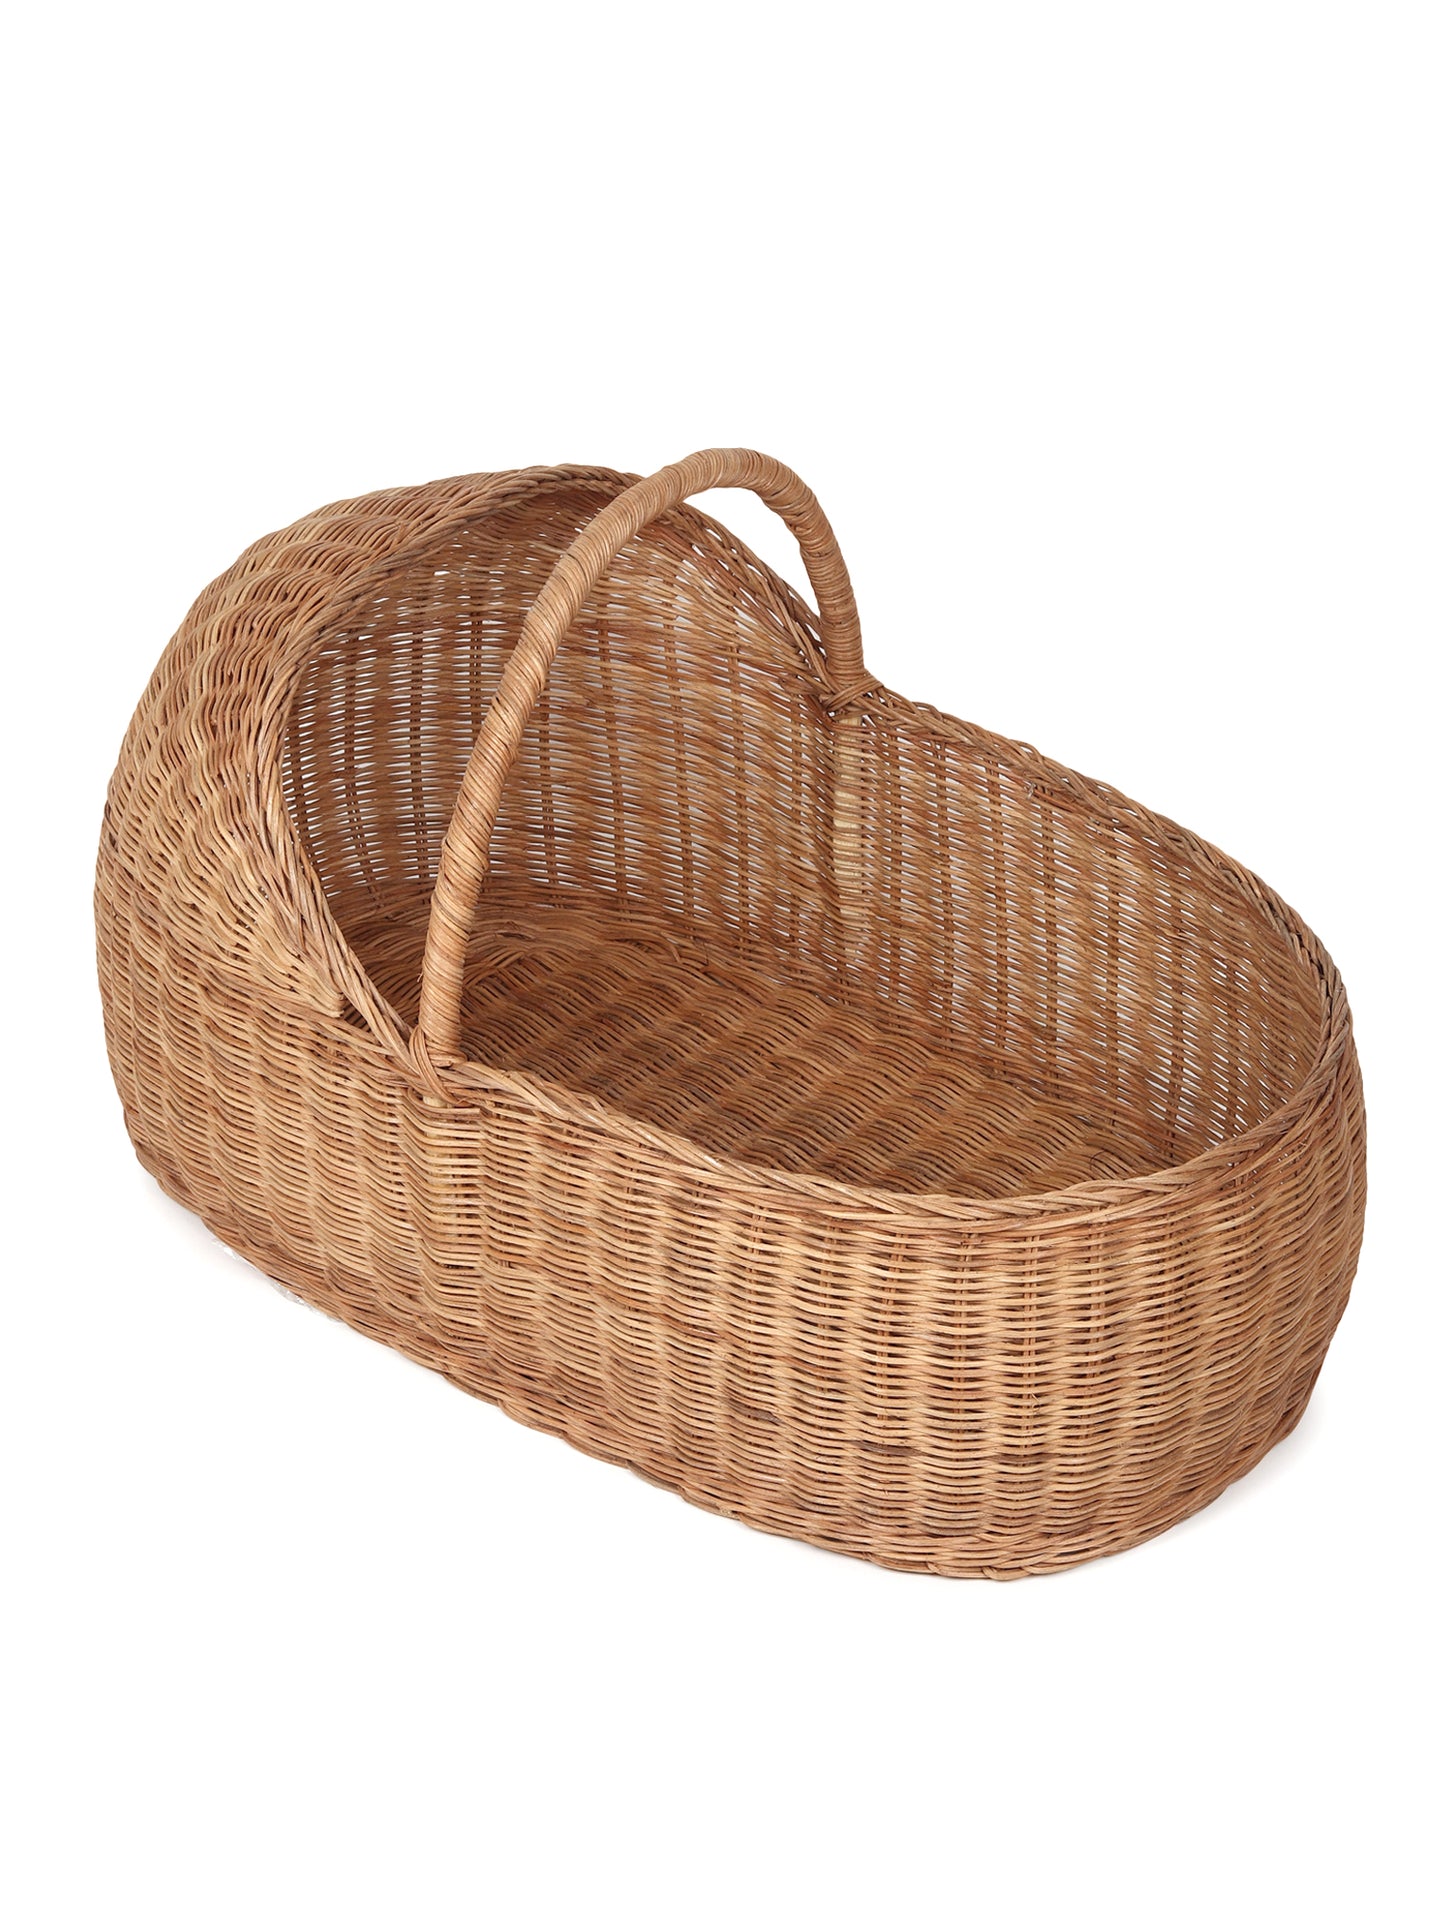 Rattan Baby Bedding | Baby Basket